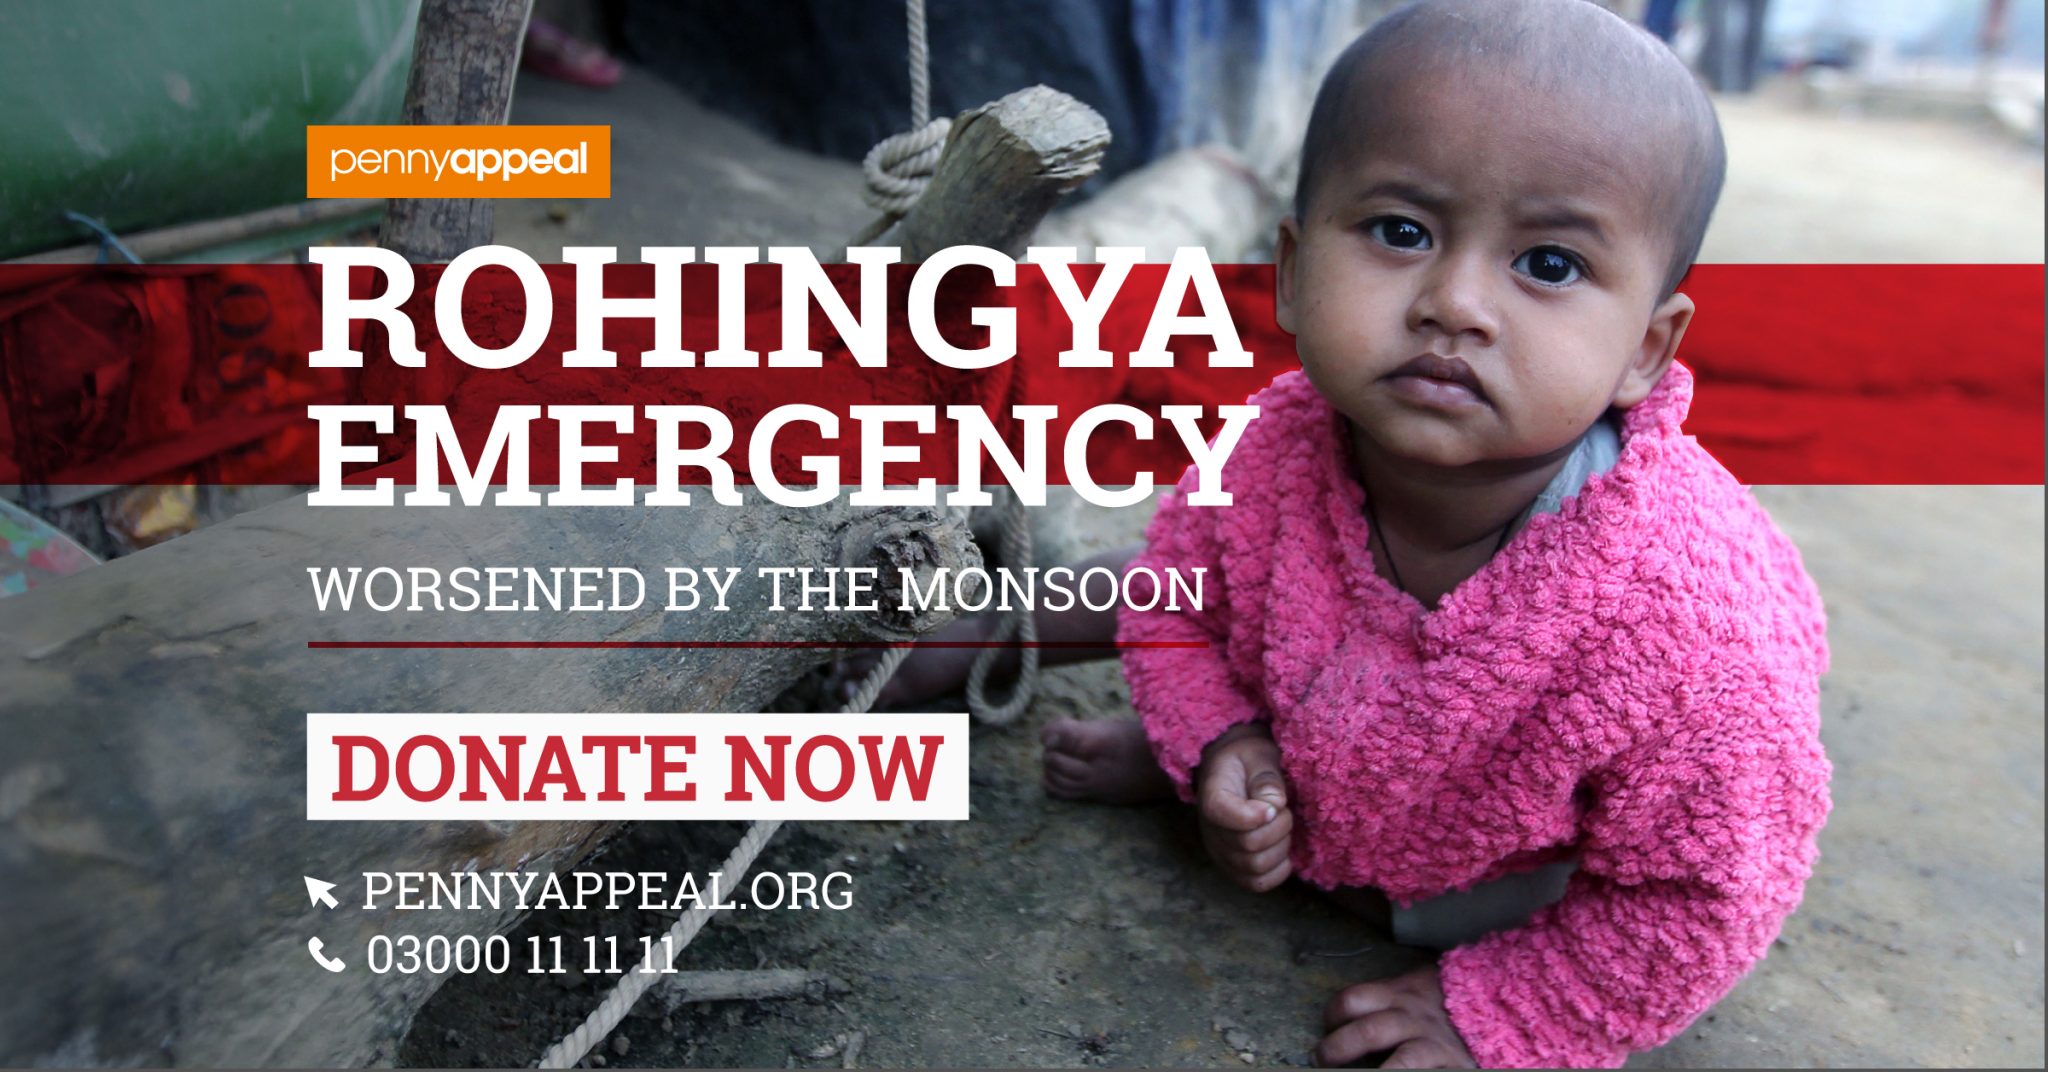 Rohingya Emergency. Worsened by the Monsoon. Donate now.